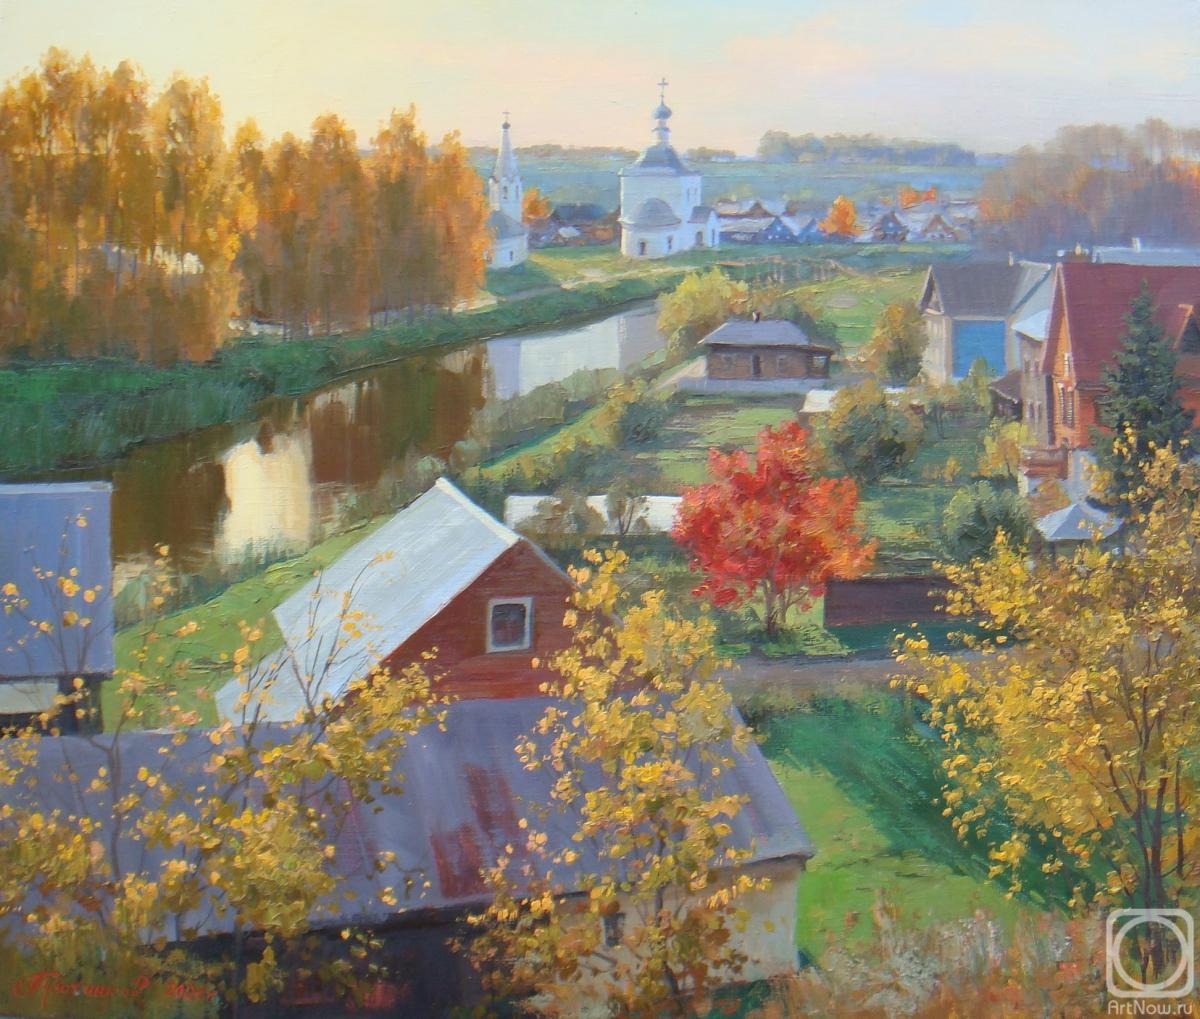 Plotnikov Alexander. Golden autumn in Suzdal